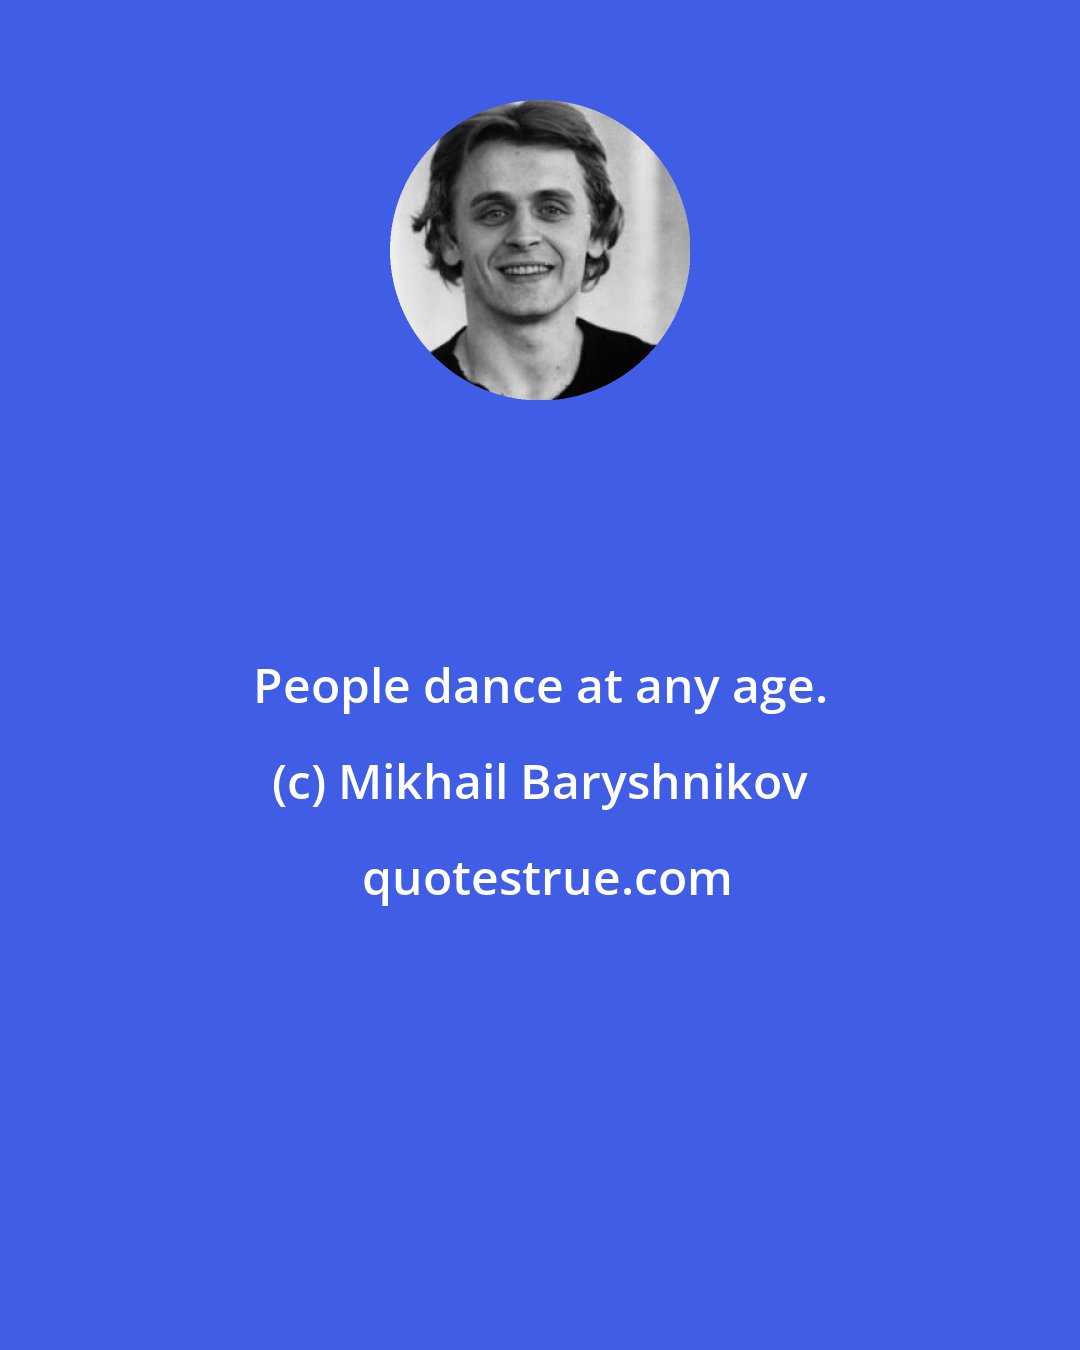 Mikhail Baryshnikov: People dance at any age.